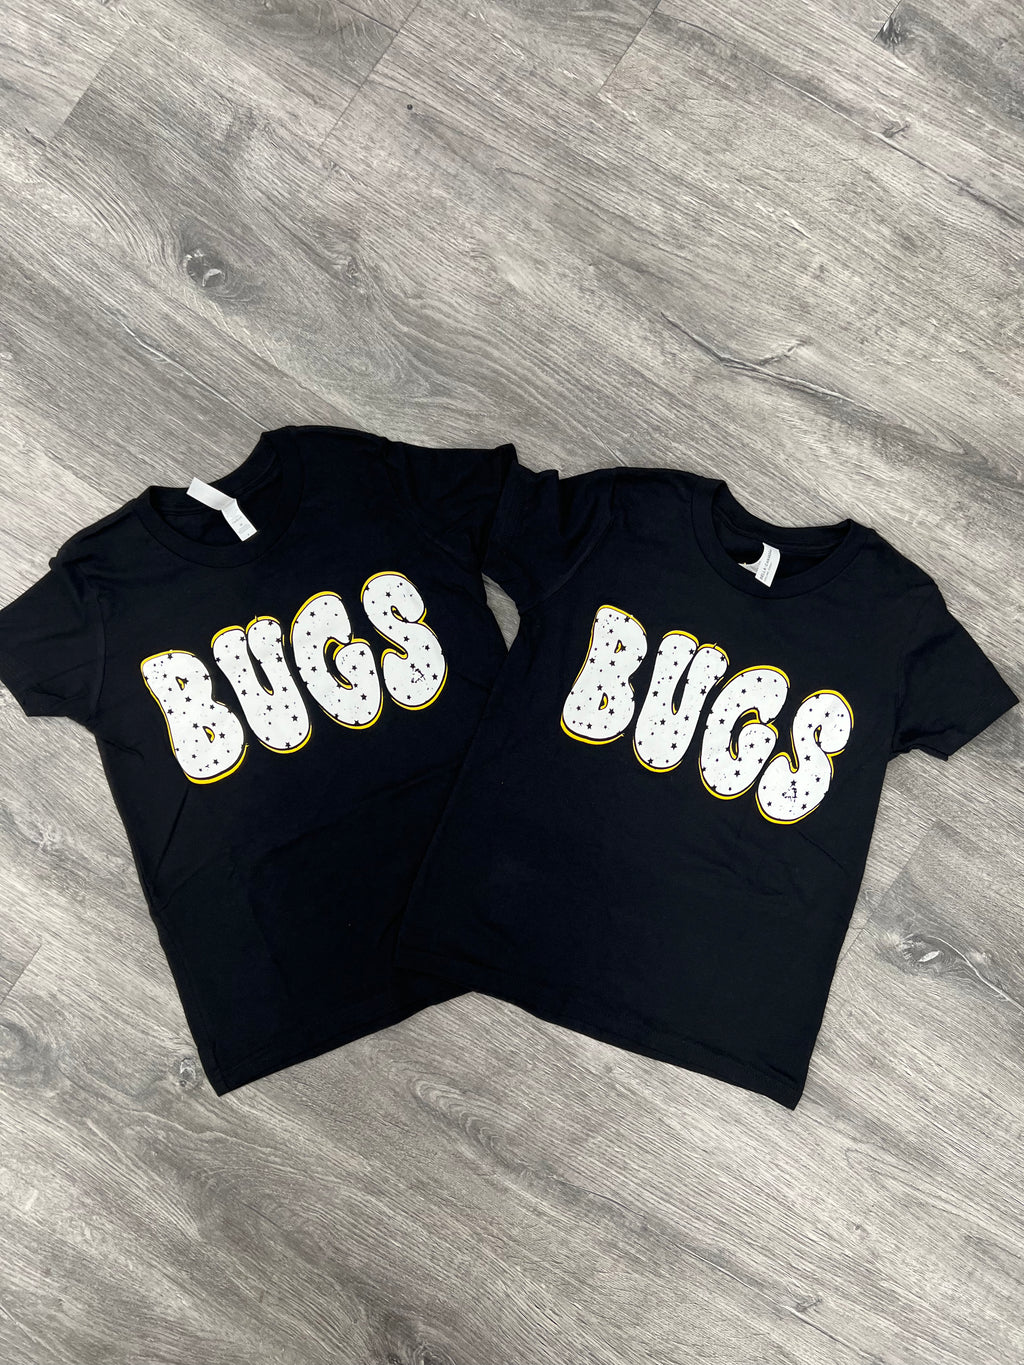 Starry Bugs Kids Tee